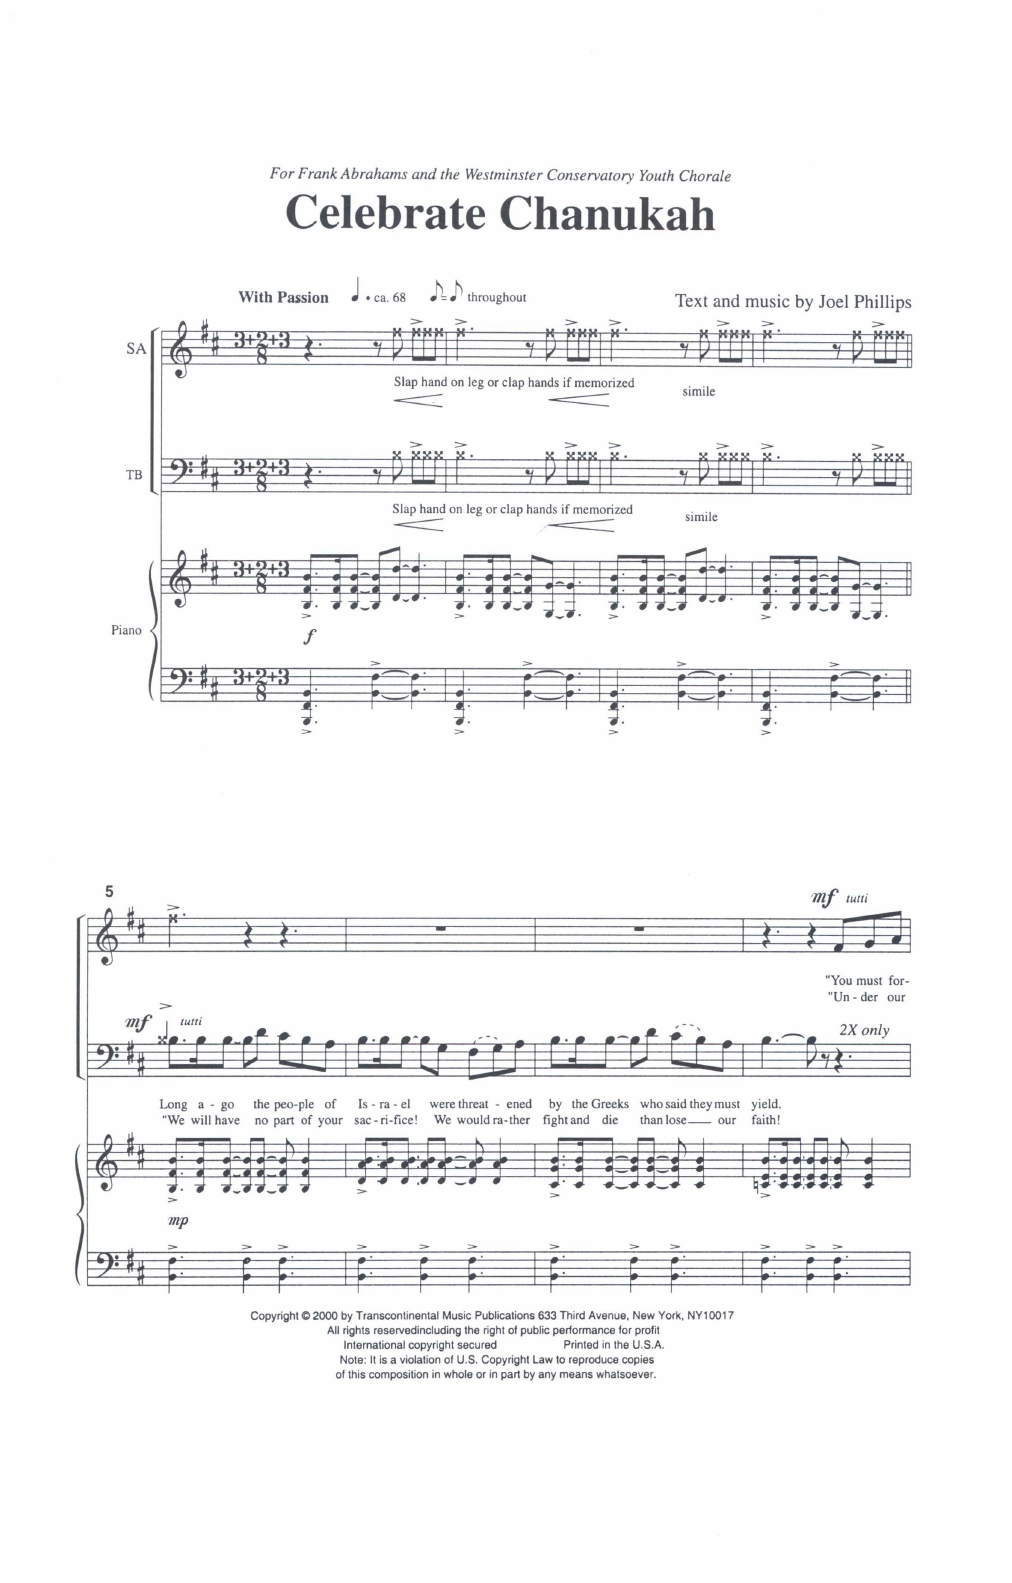 Joel C. Phillips Celebrate Chanukah Sheet Music Notes & Chords for SATB Choir - Download or Print PDF